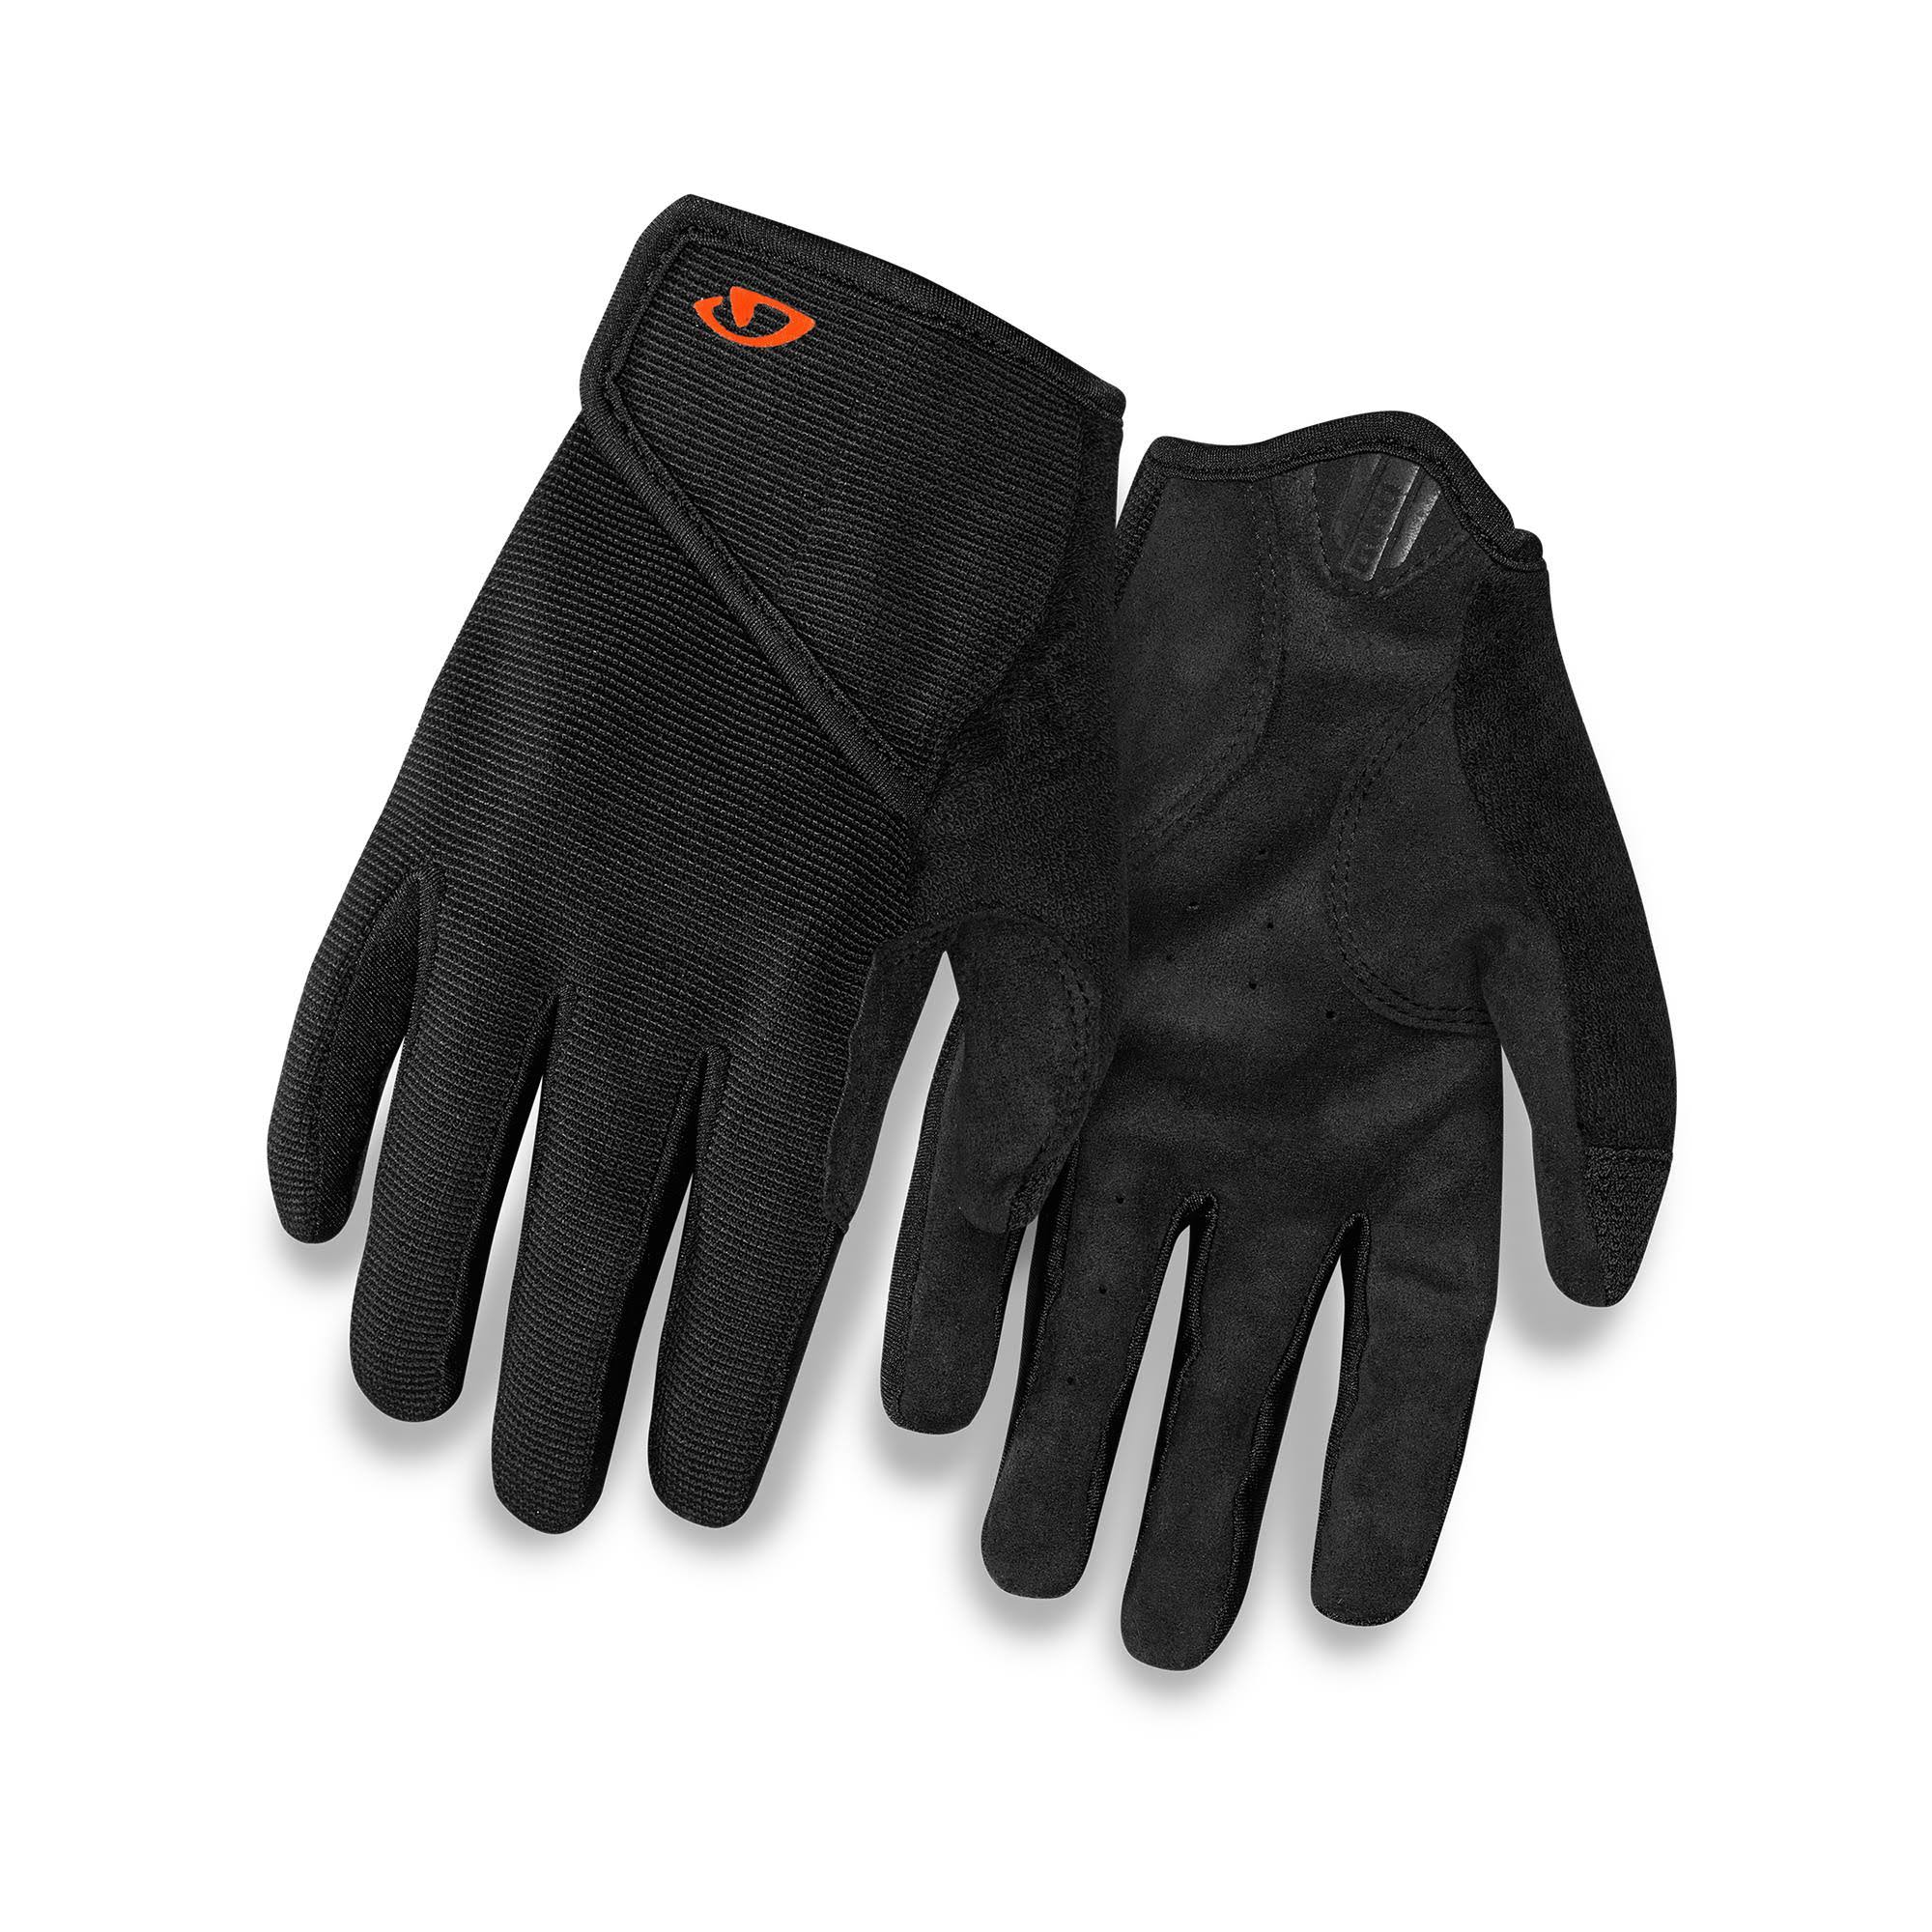 Giro Dnd Jr II Youth Bike Gloves - Black, Large